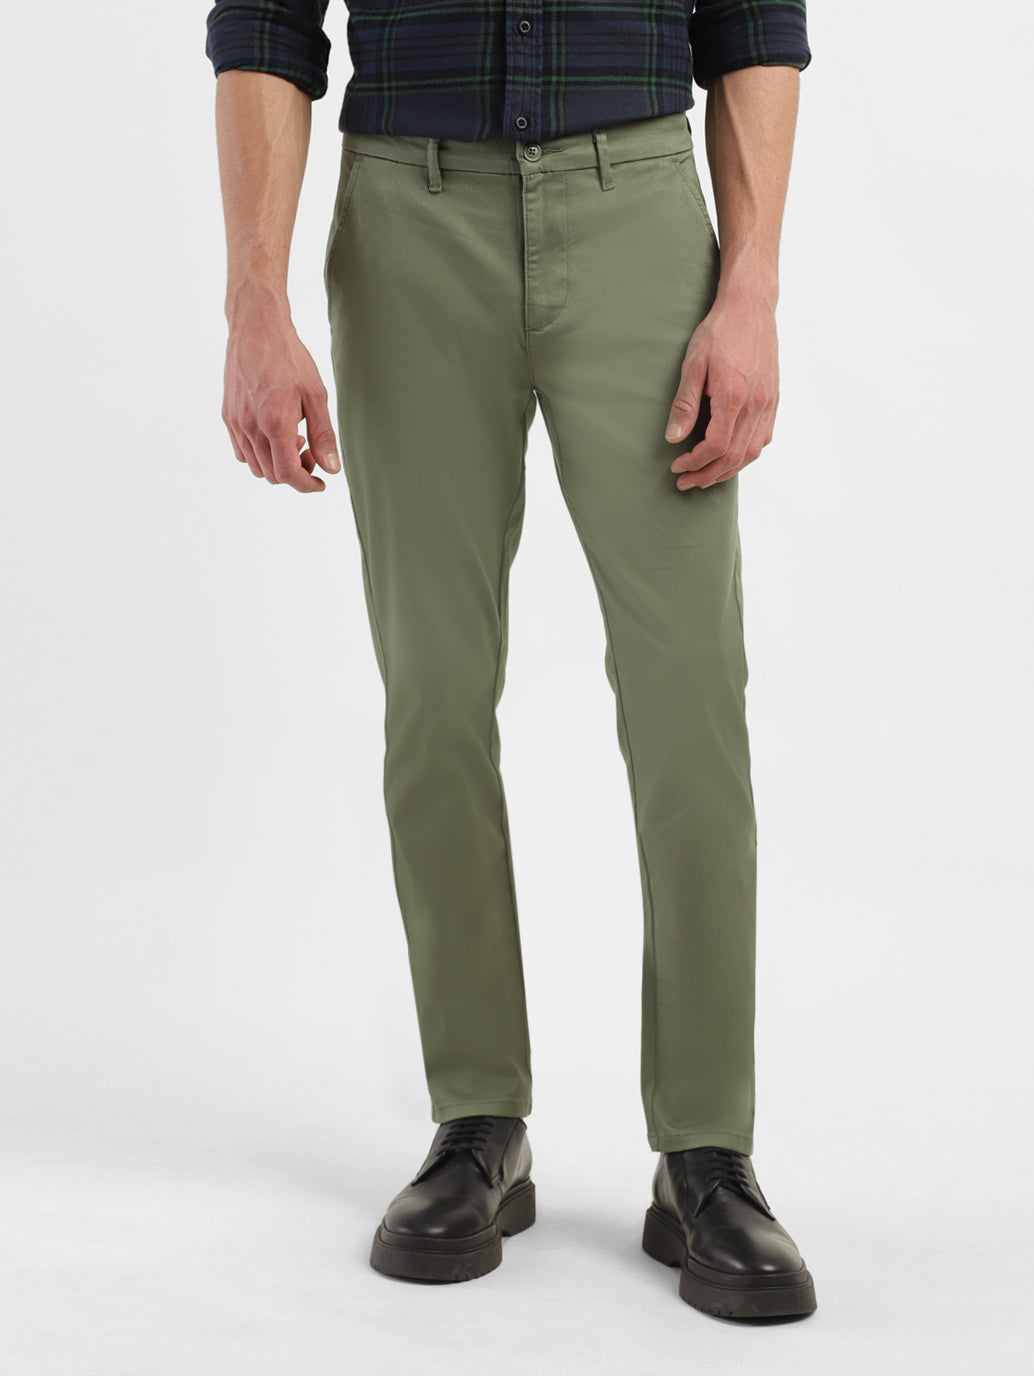 Men's Men's Olive Slim Fit Trousers